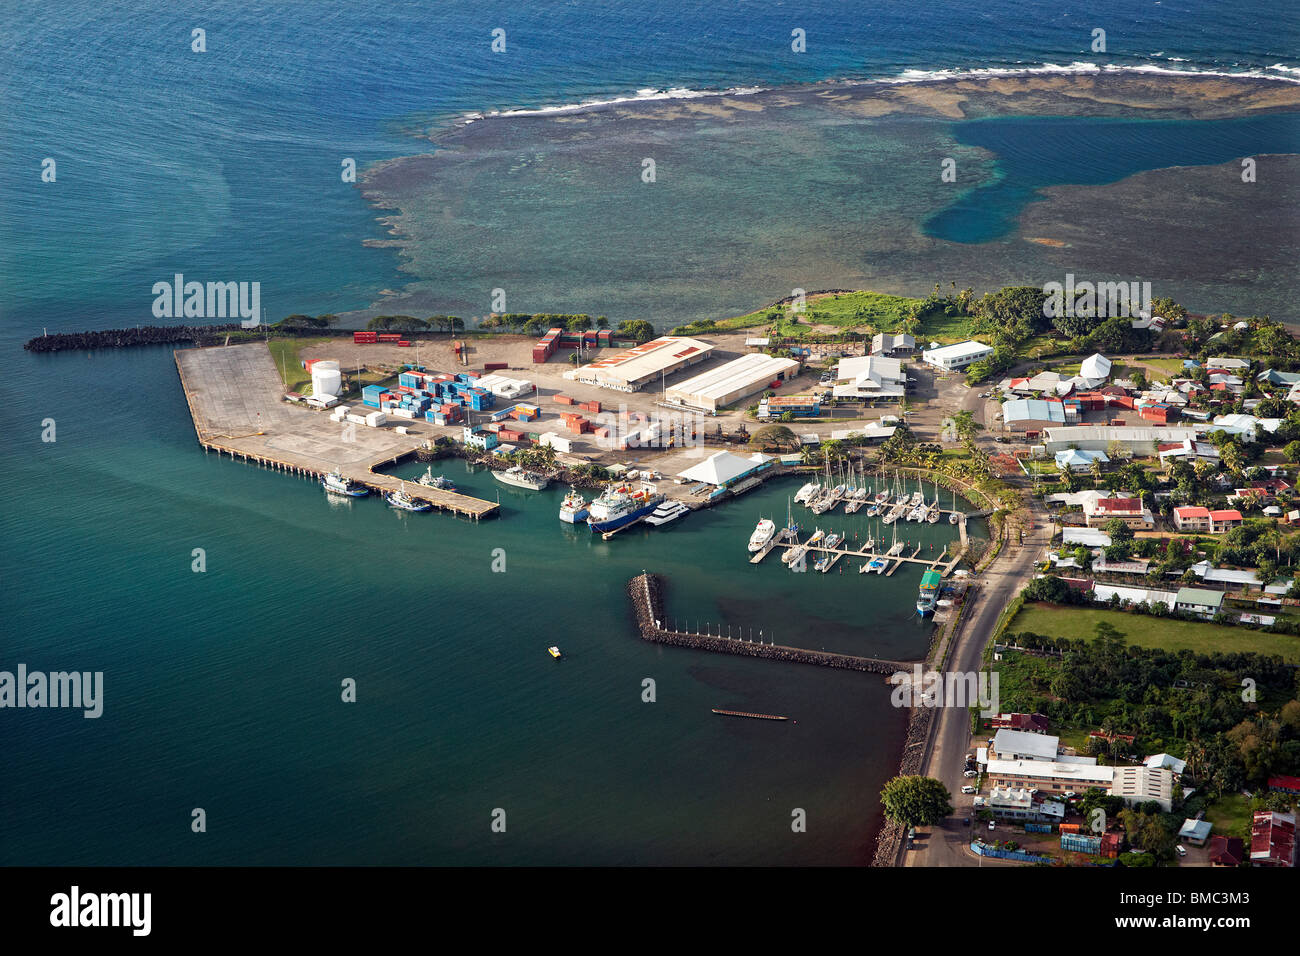 Vista aérea del puerto y marina de Apia, Upolu, Samoa Foto de stock